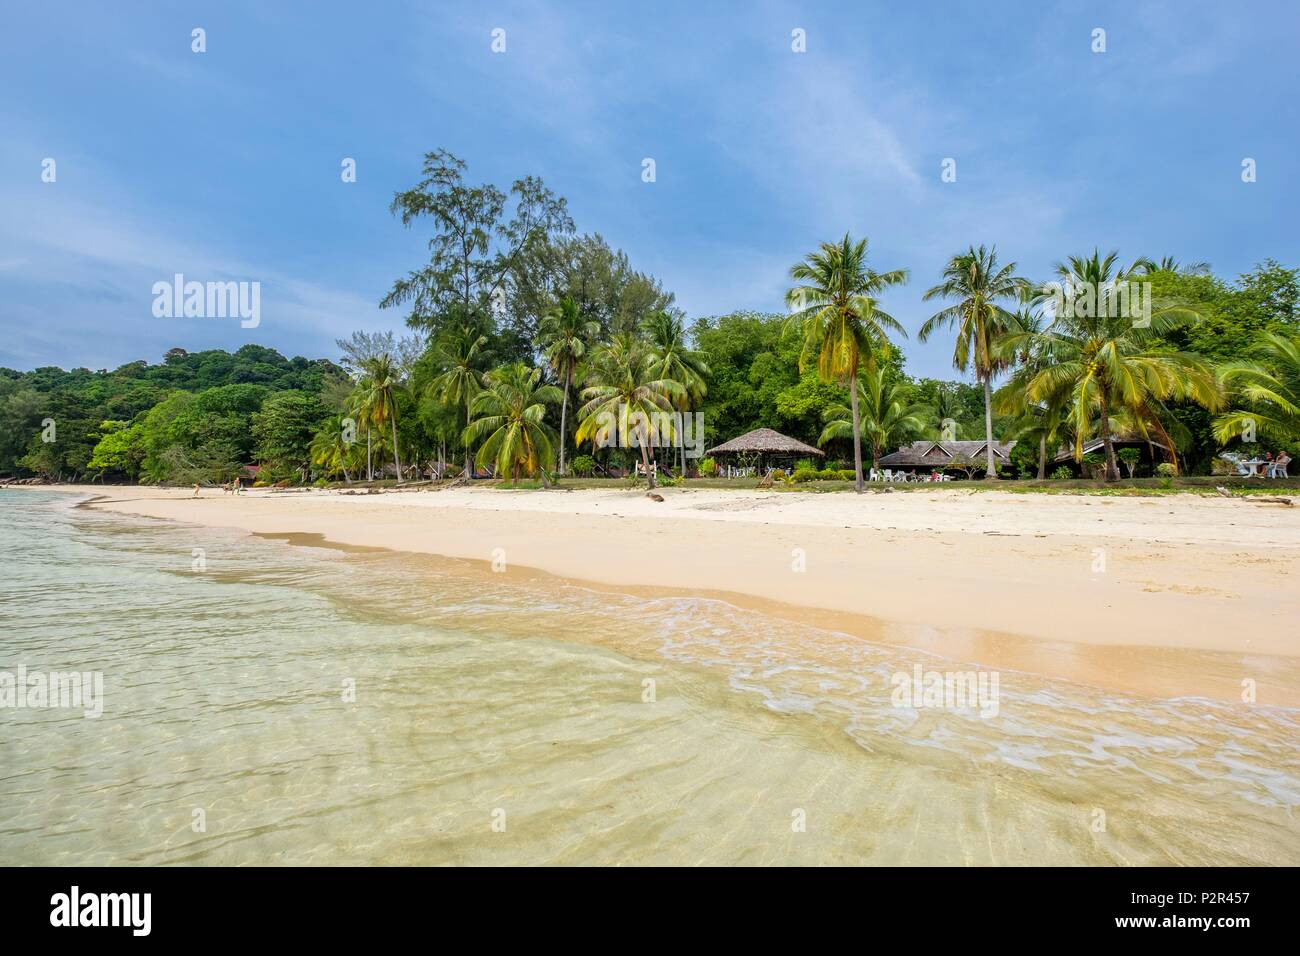 Tailandia, la provincia de Satun, Mu Ko Phetra Parque Nacional Marino Ko Bulon Leh isla, la gran playa de arena blanca en la parte oriental de la isla y el Complejo Pansand bajo los cocoteros Foto de stock